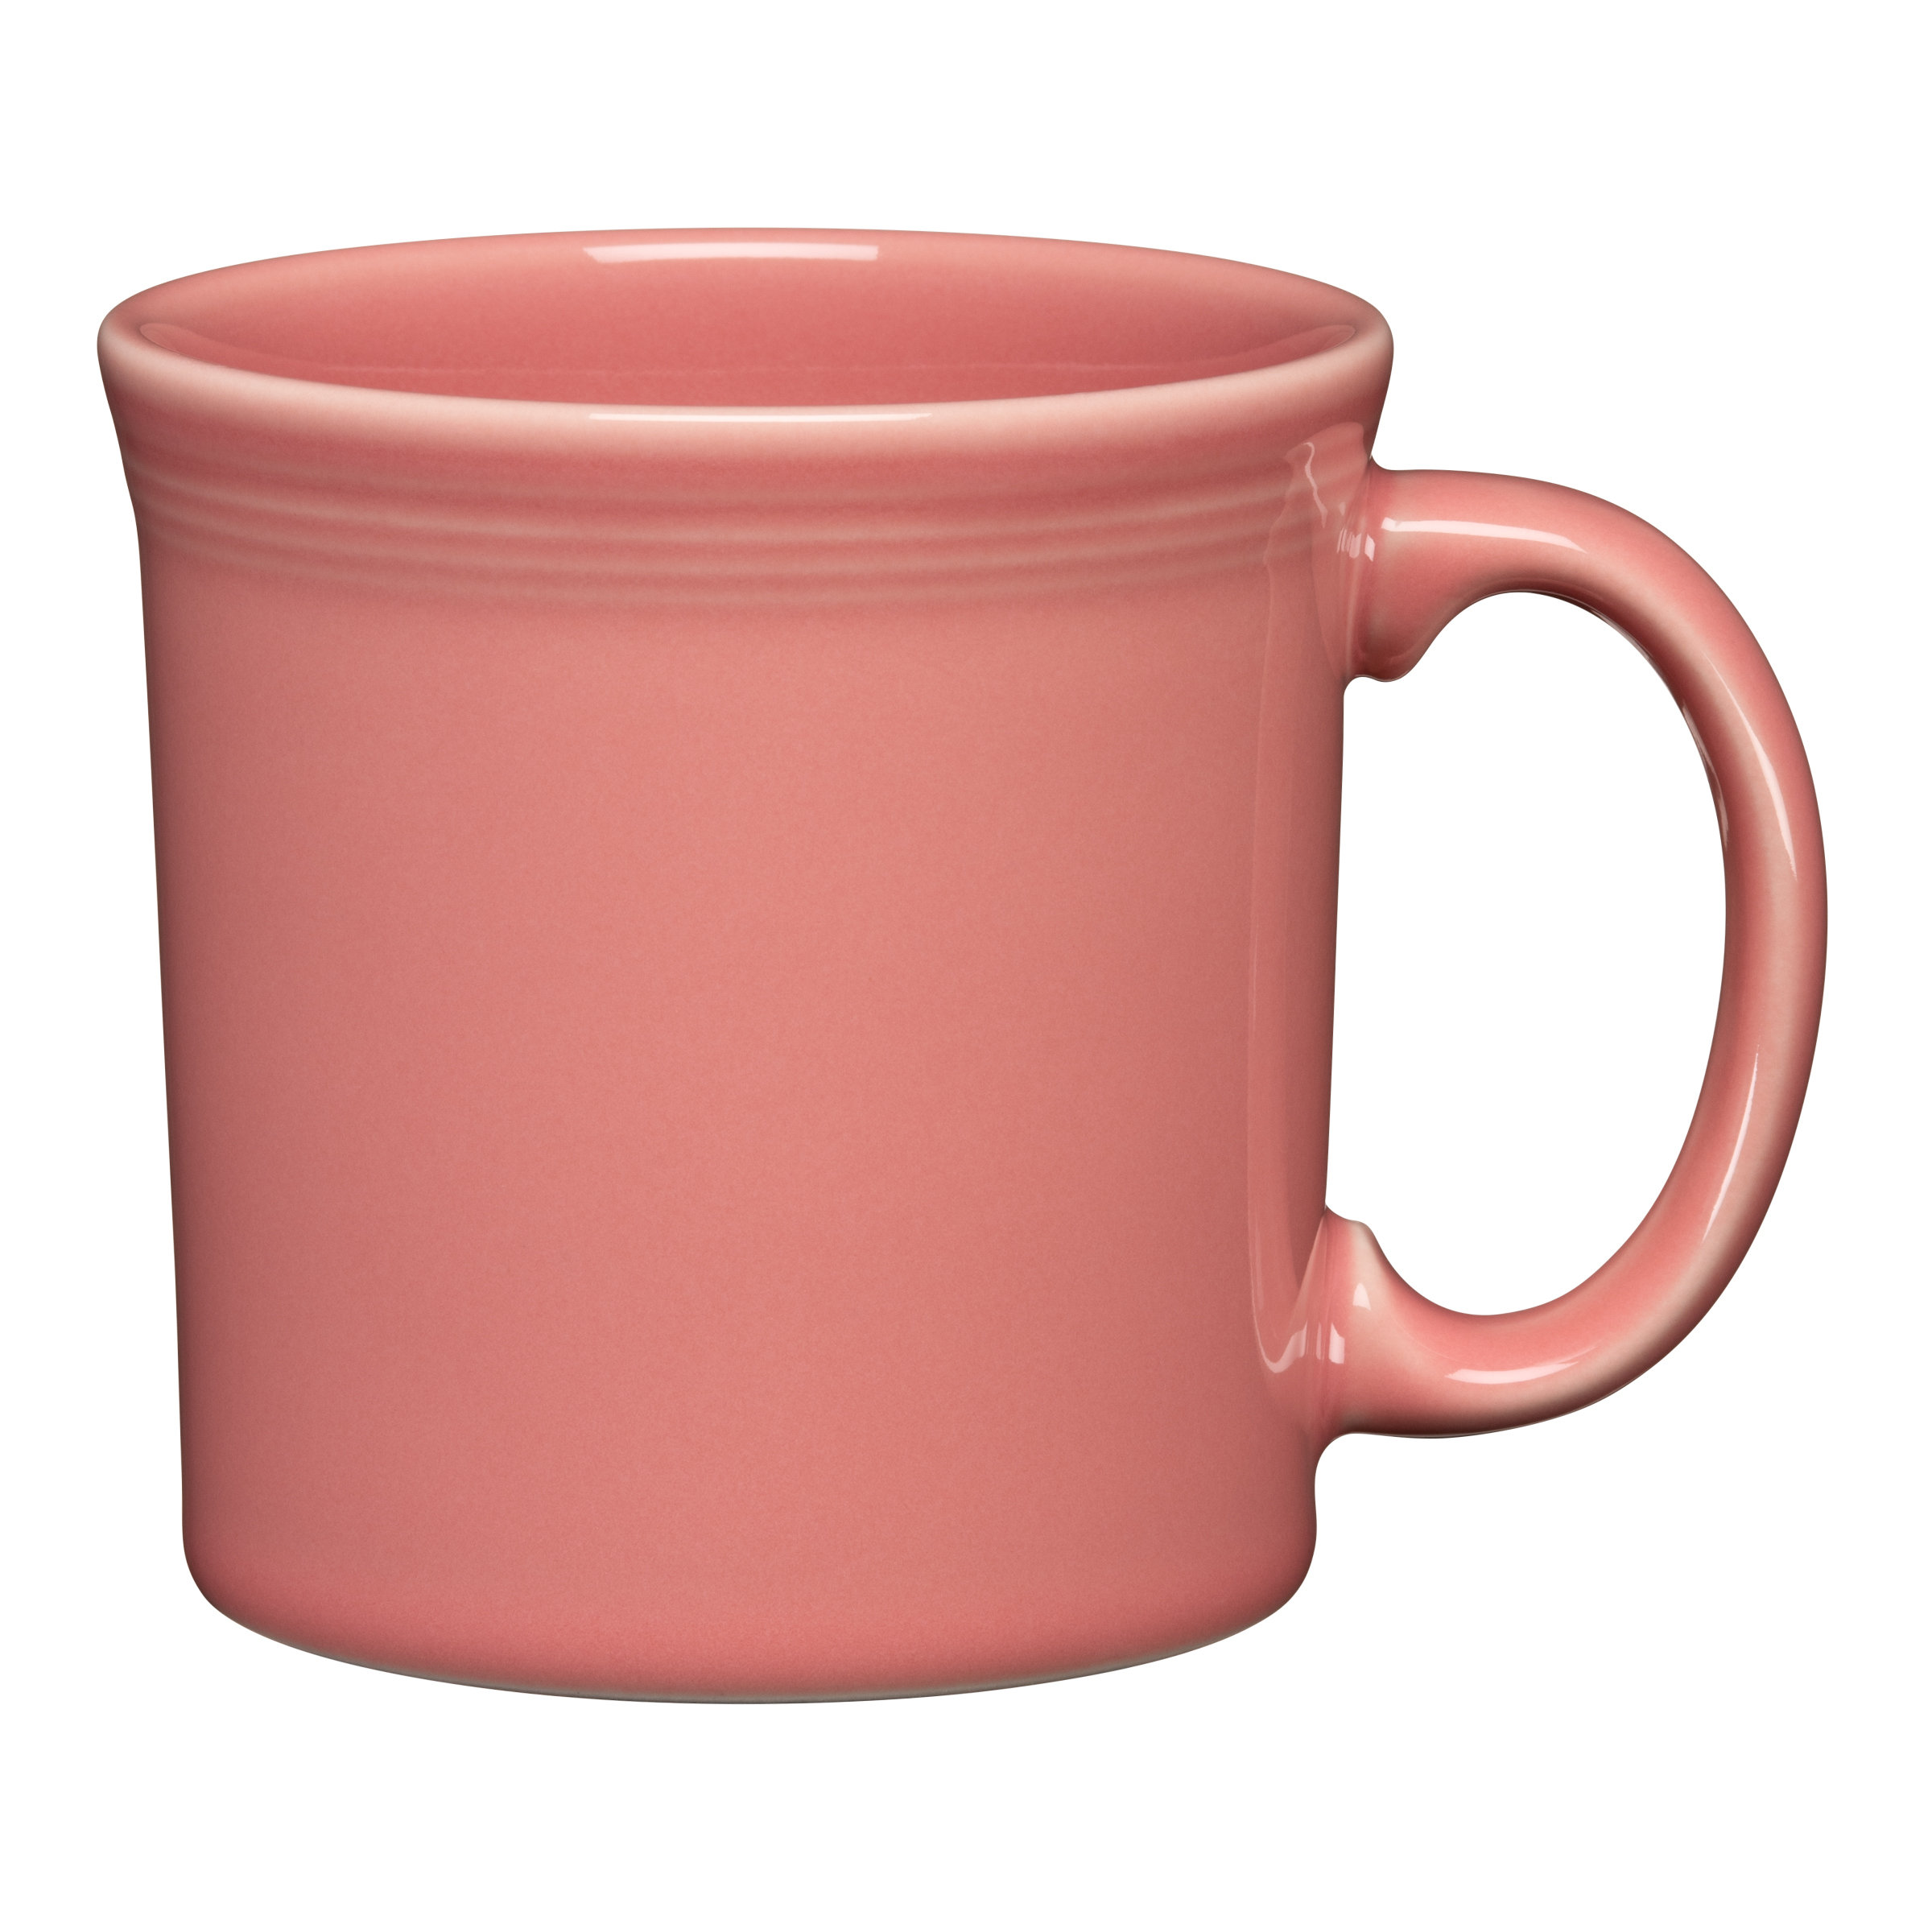 2023 Hot Sales! Cute Coffee Mugs with Big Handle - China Mug and